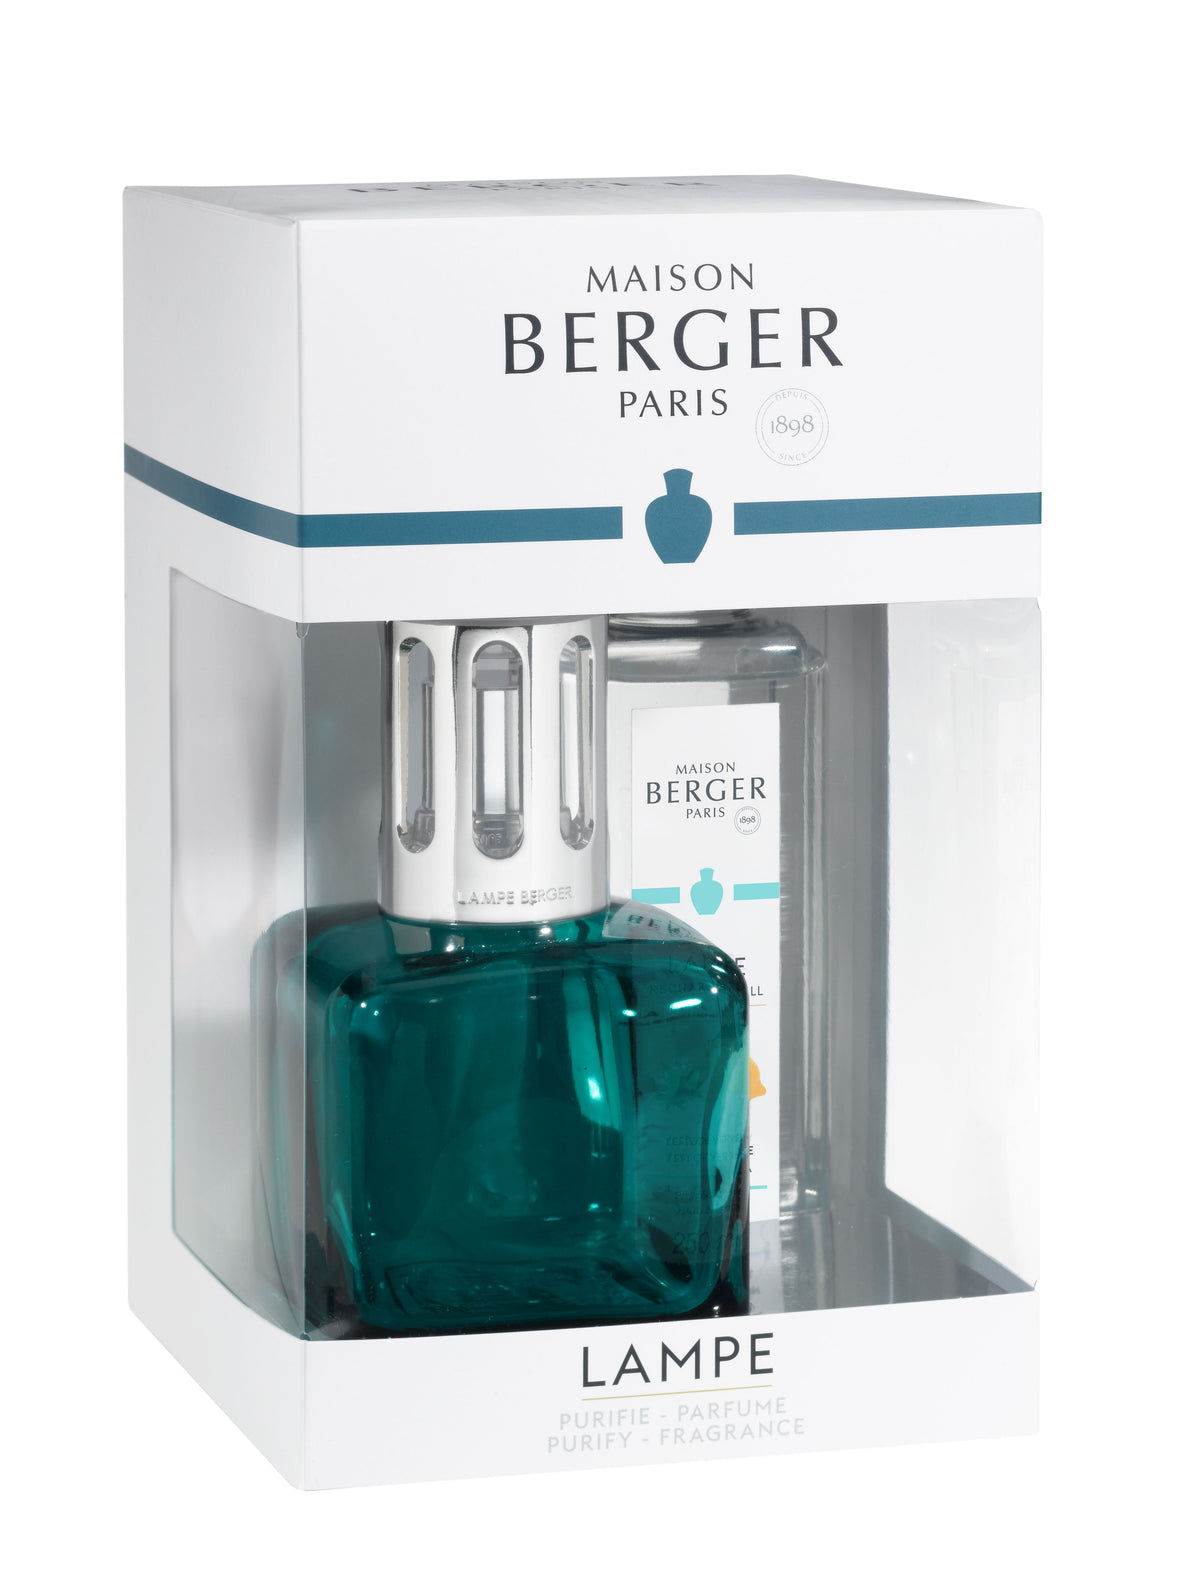 Maison Berger Ice Cube Green Lampe Gift Set